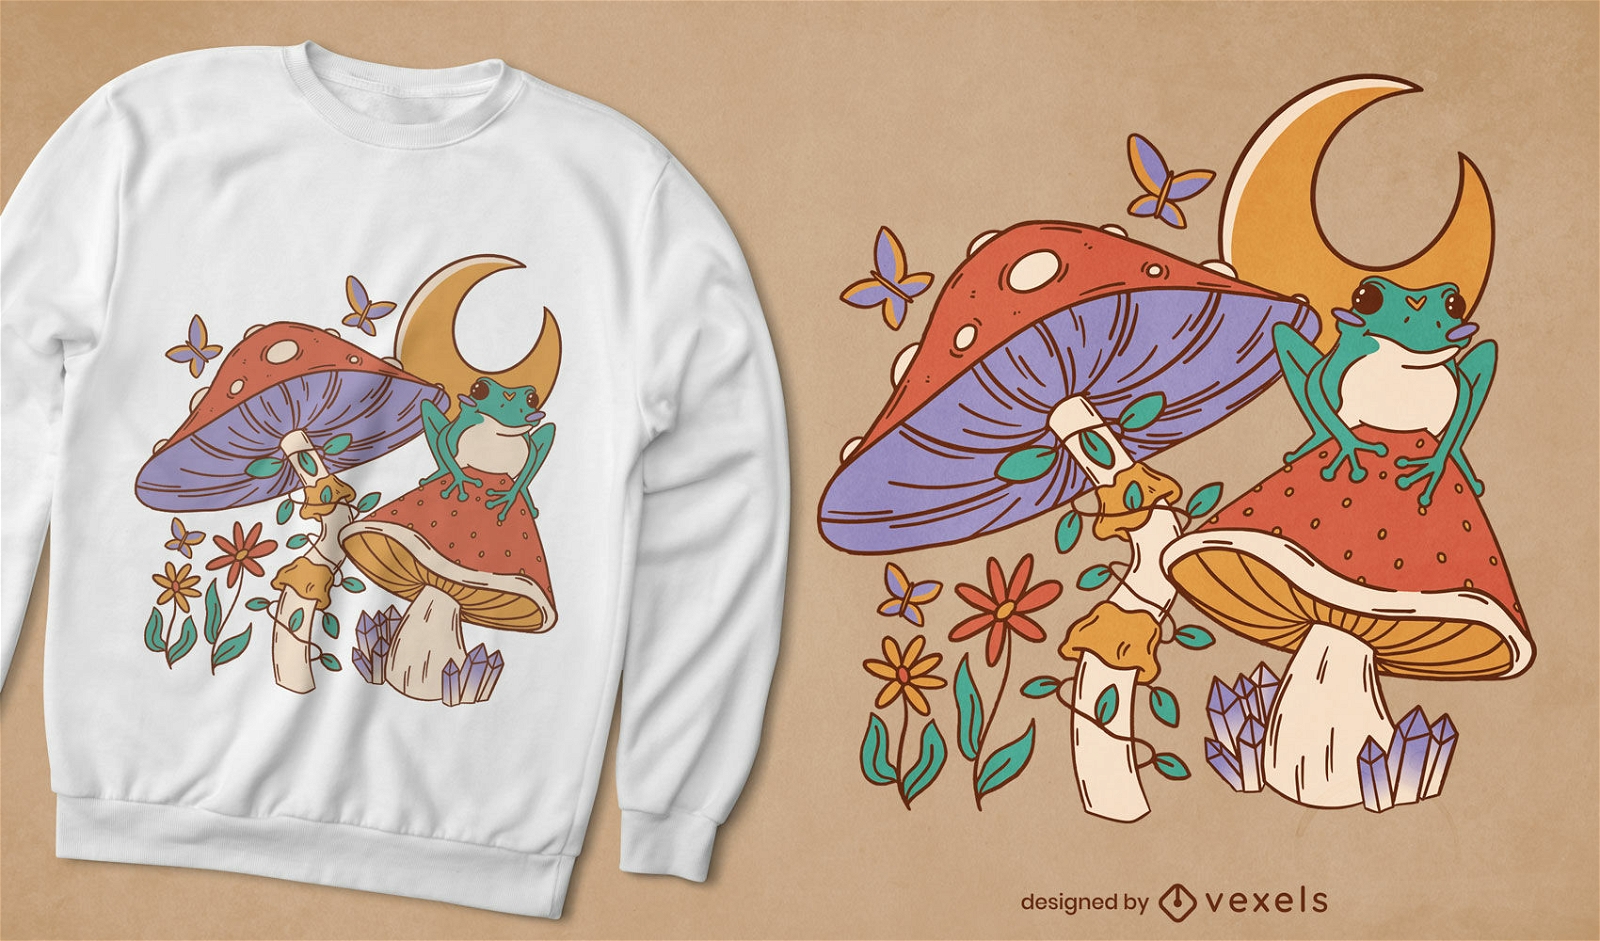 Fungi and plants nature t-shirt design